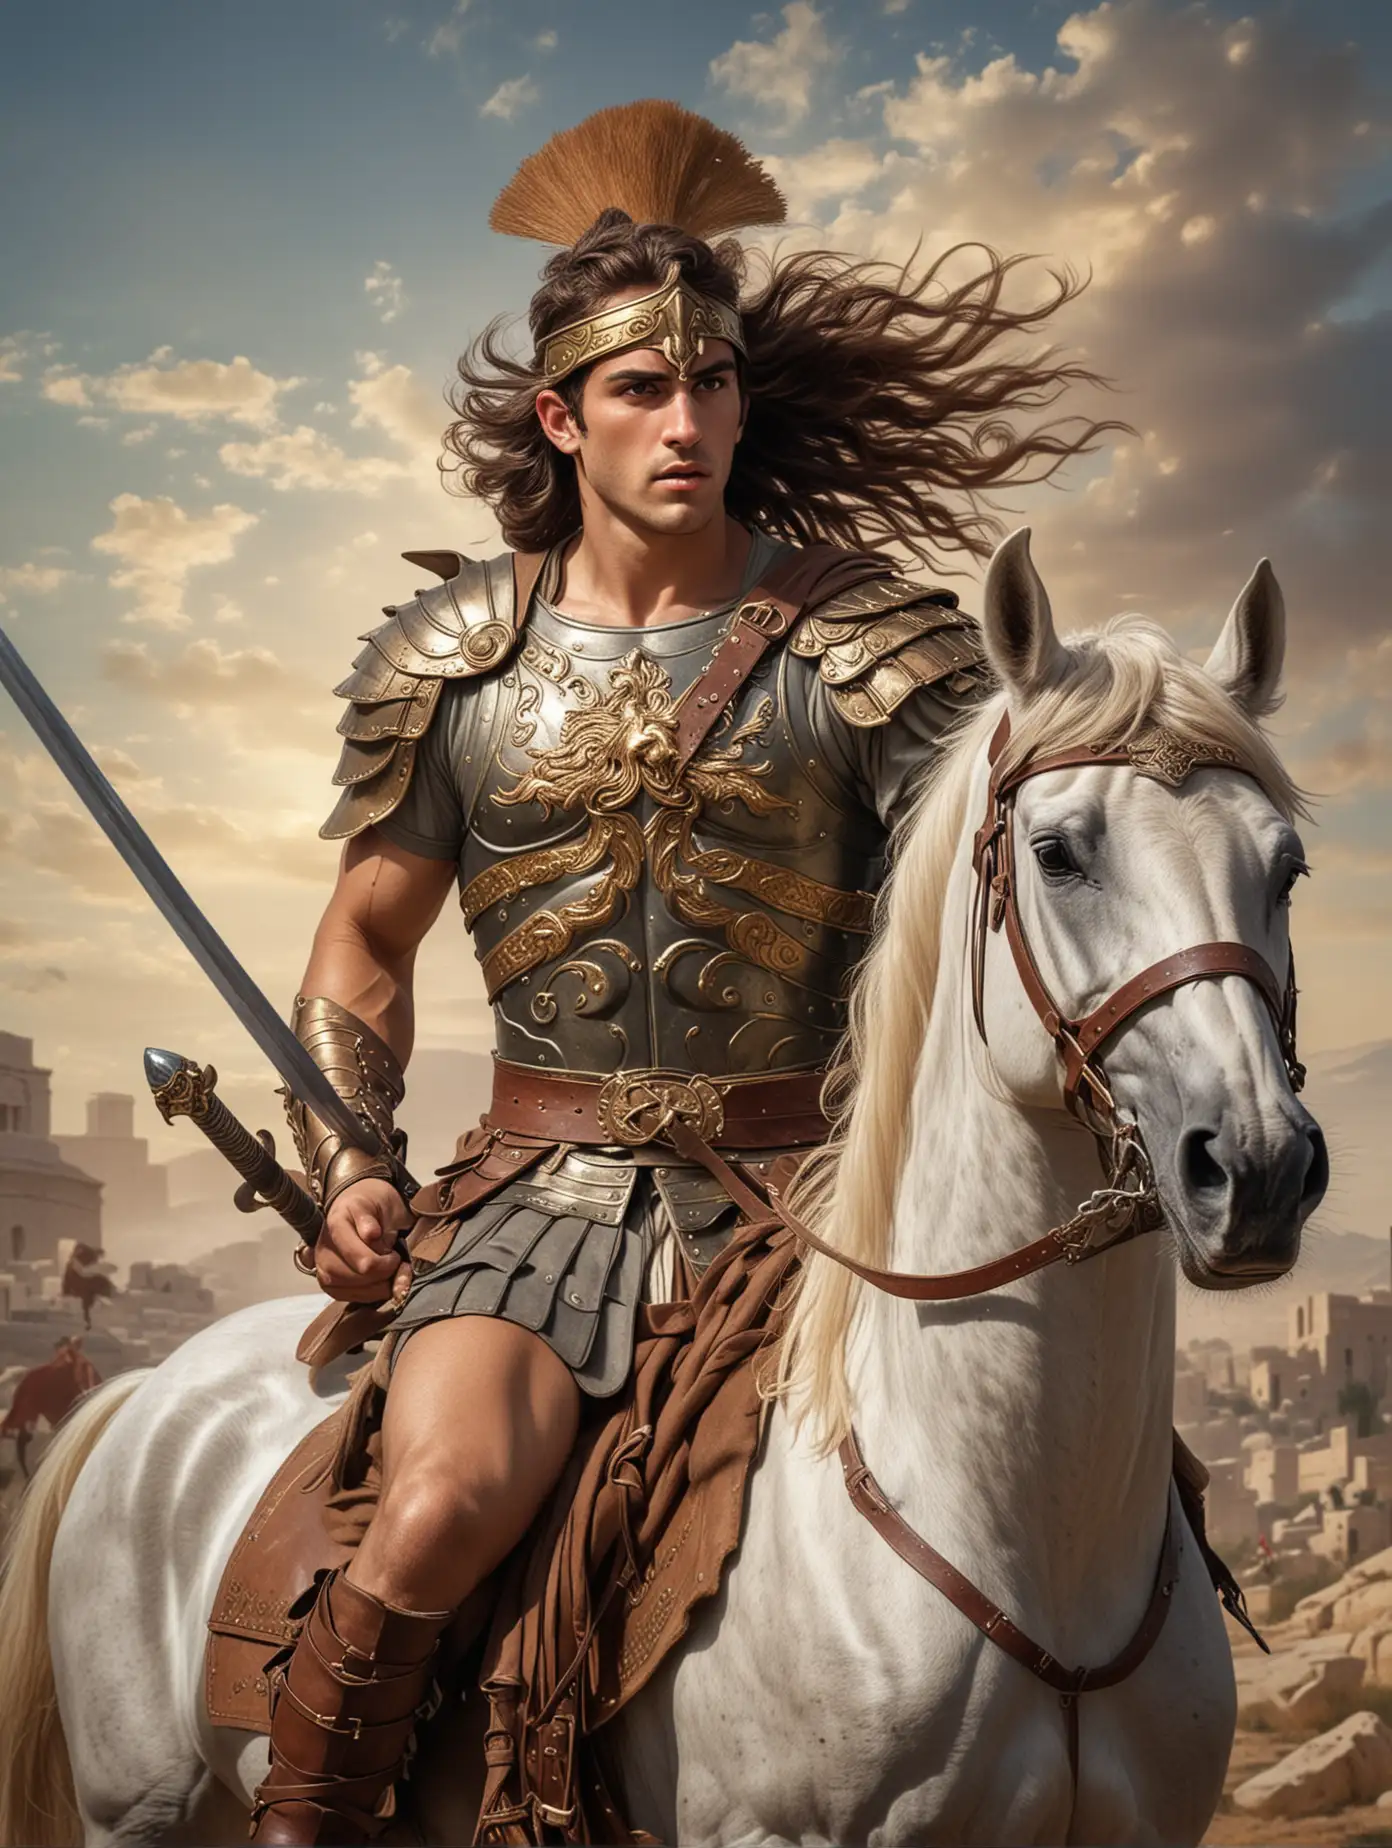 Heroic Greek Soldier Battles Dragon on Horseback